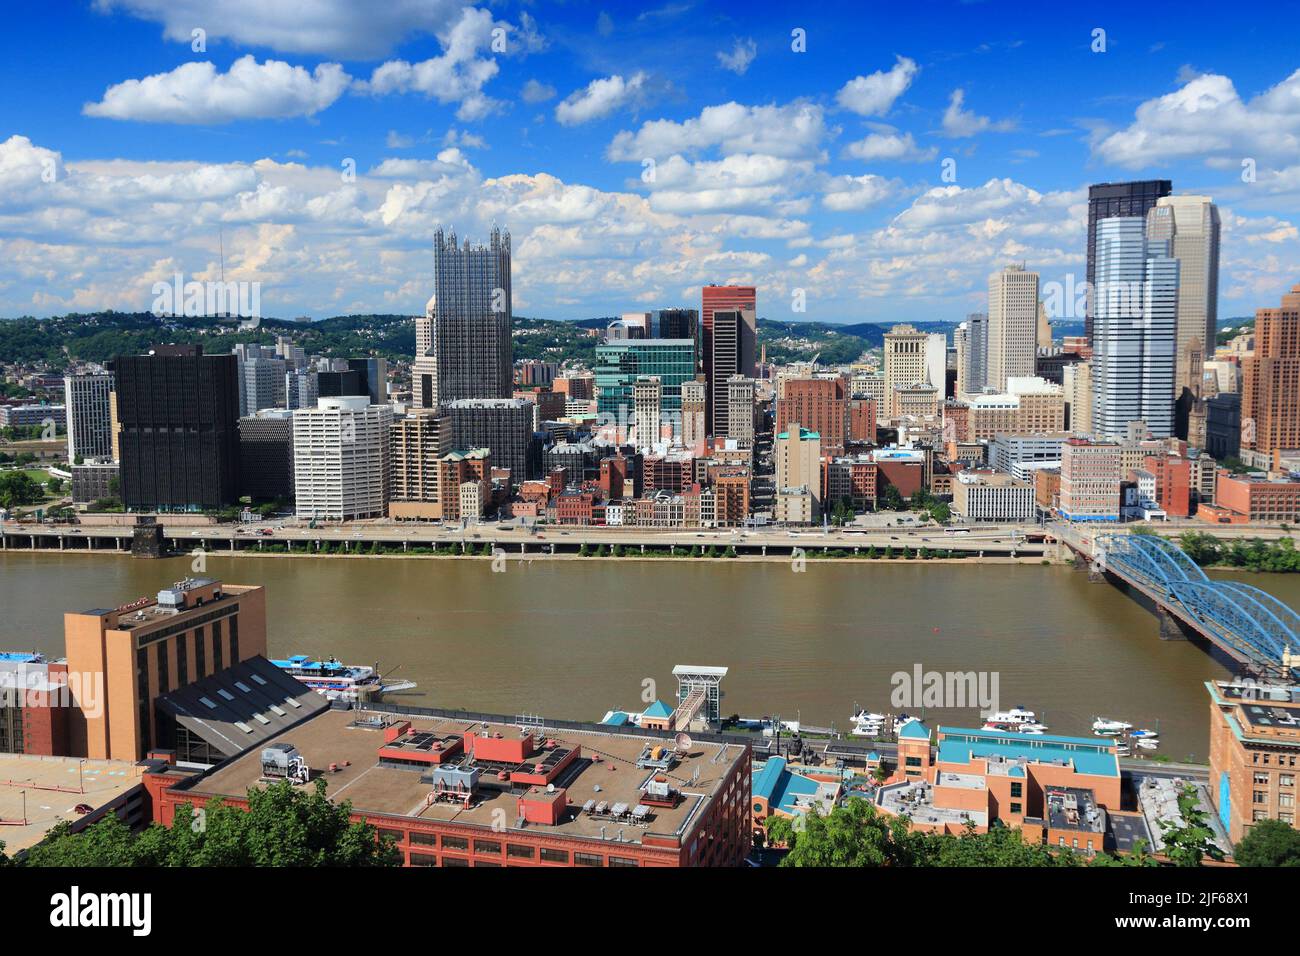 American city - Pittsburgh photo. Pittsburgh city skyline in Pennsylvania. Stock Photo